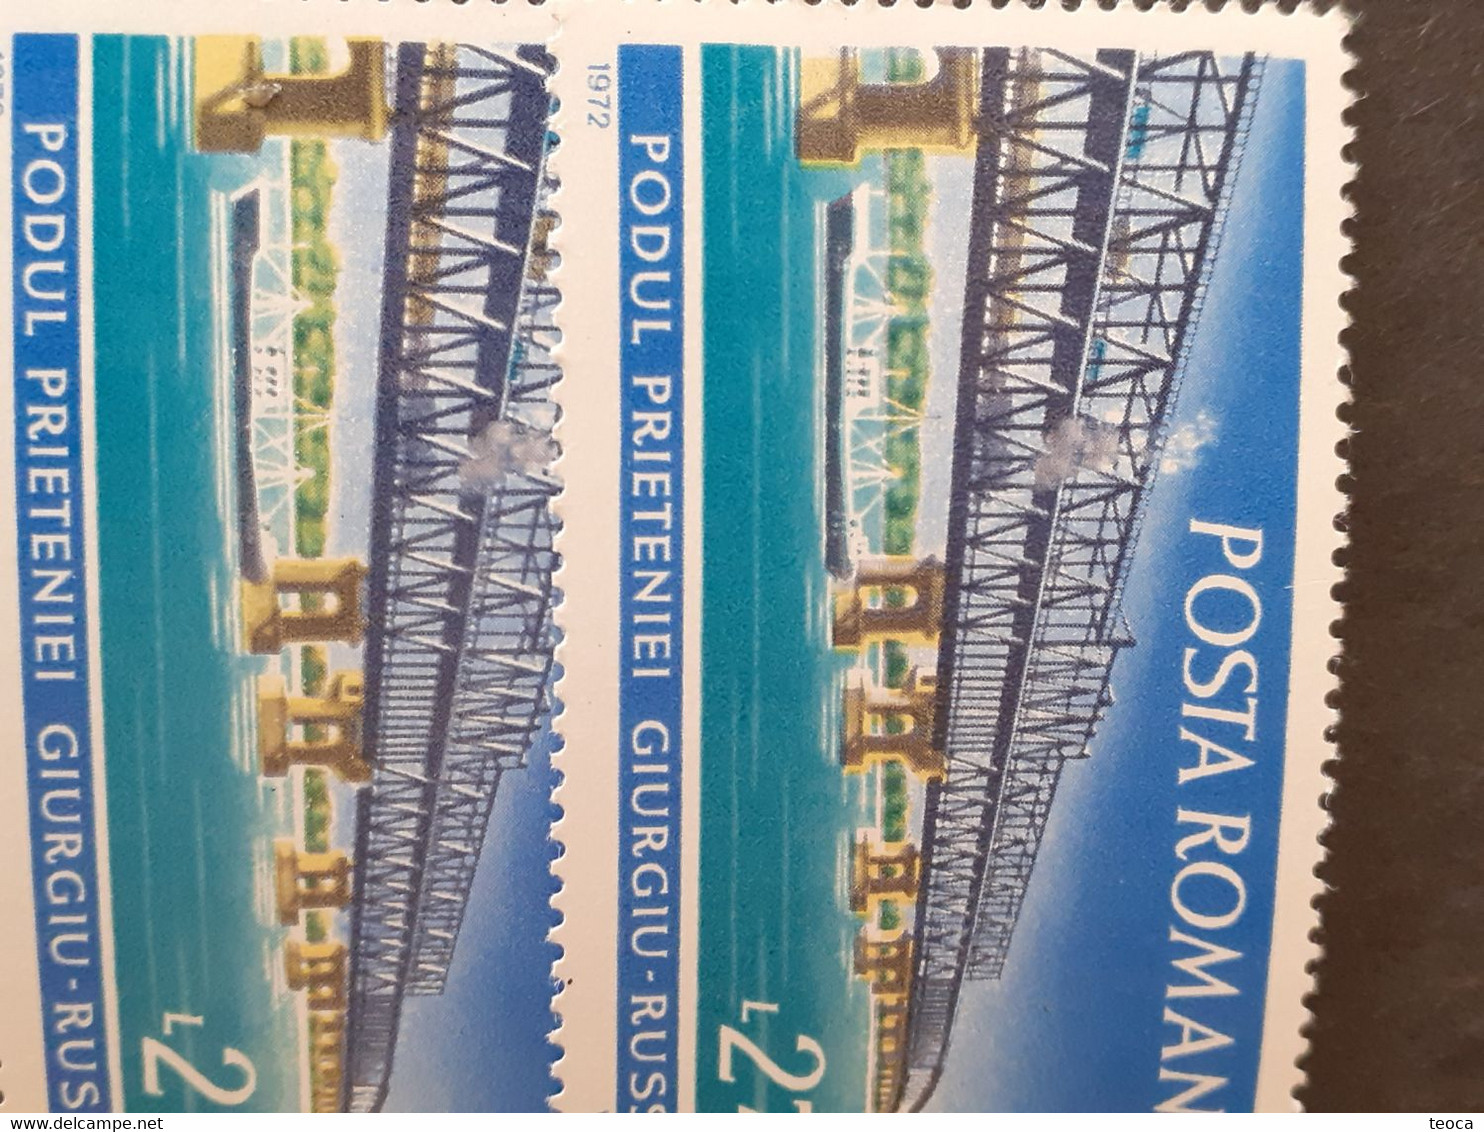 Romania 1972 # Mi 3031- 3033 Danube bridges, printed with multiple errors, color ,offset printing